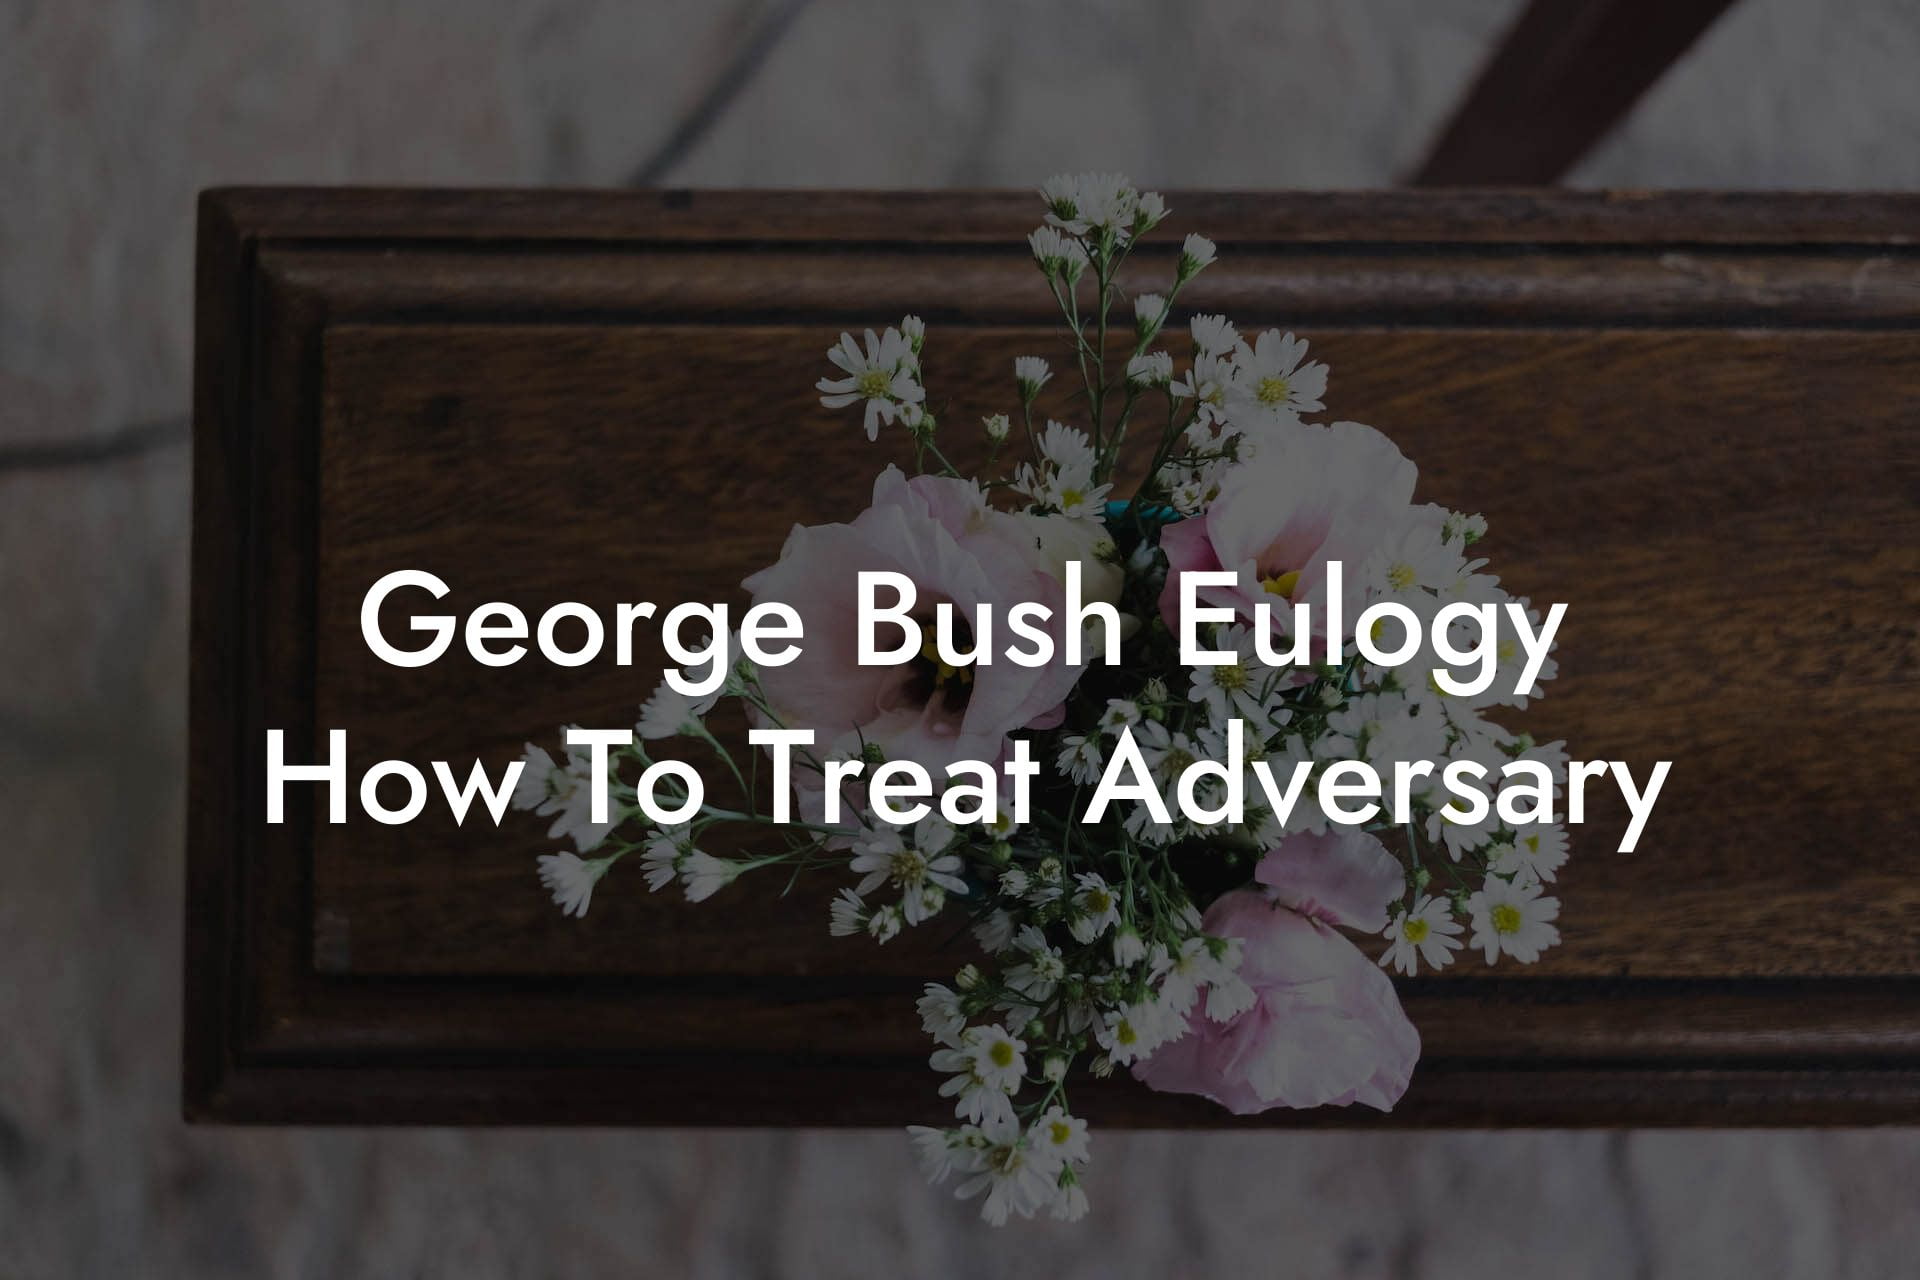 George Bush Eulogy How To Treat Adversary